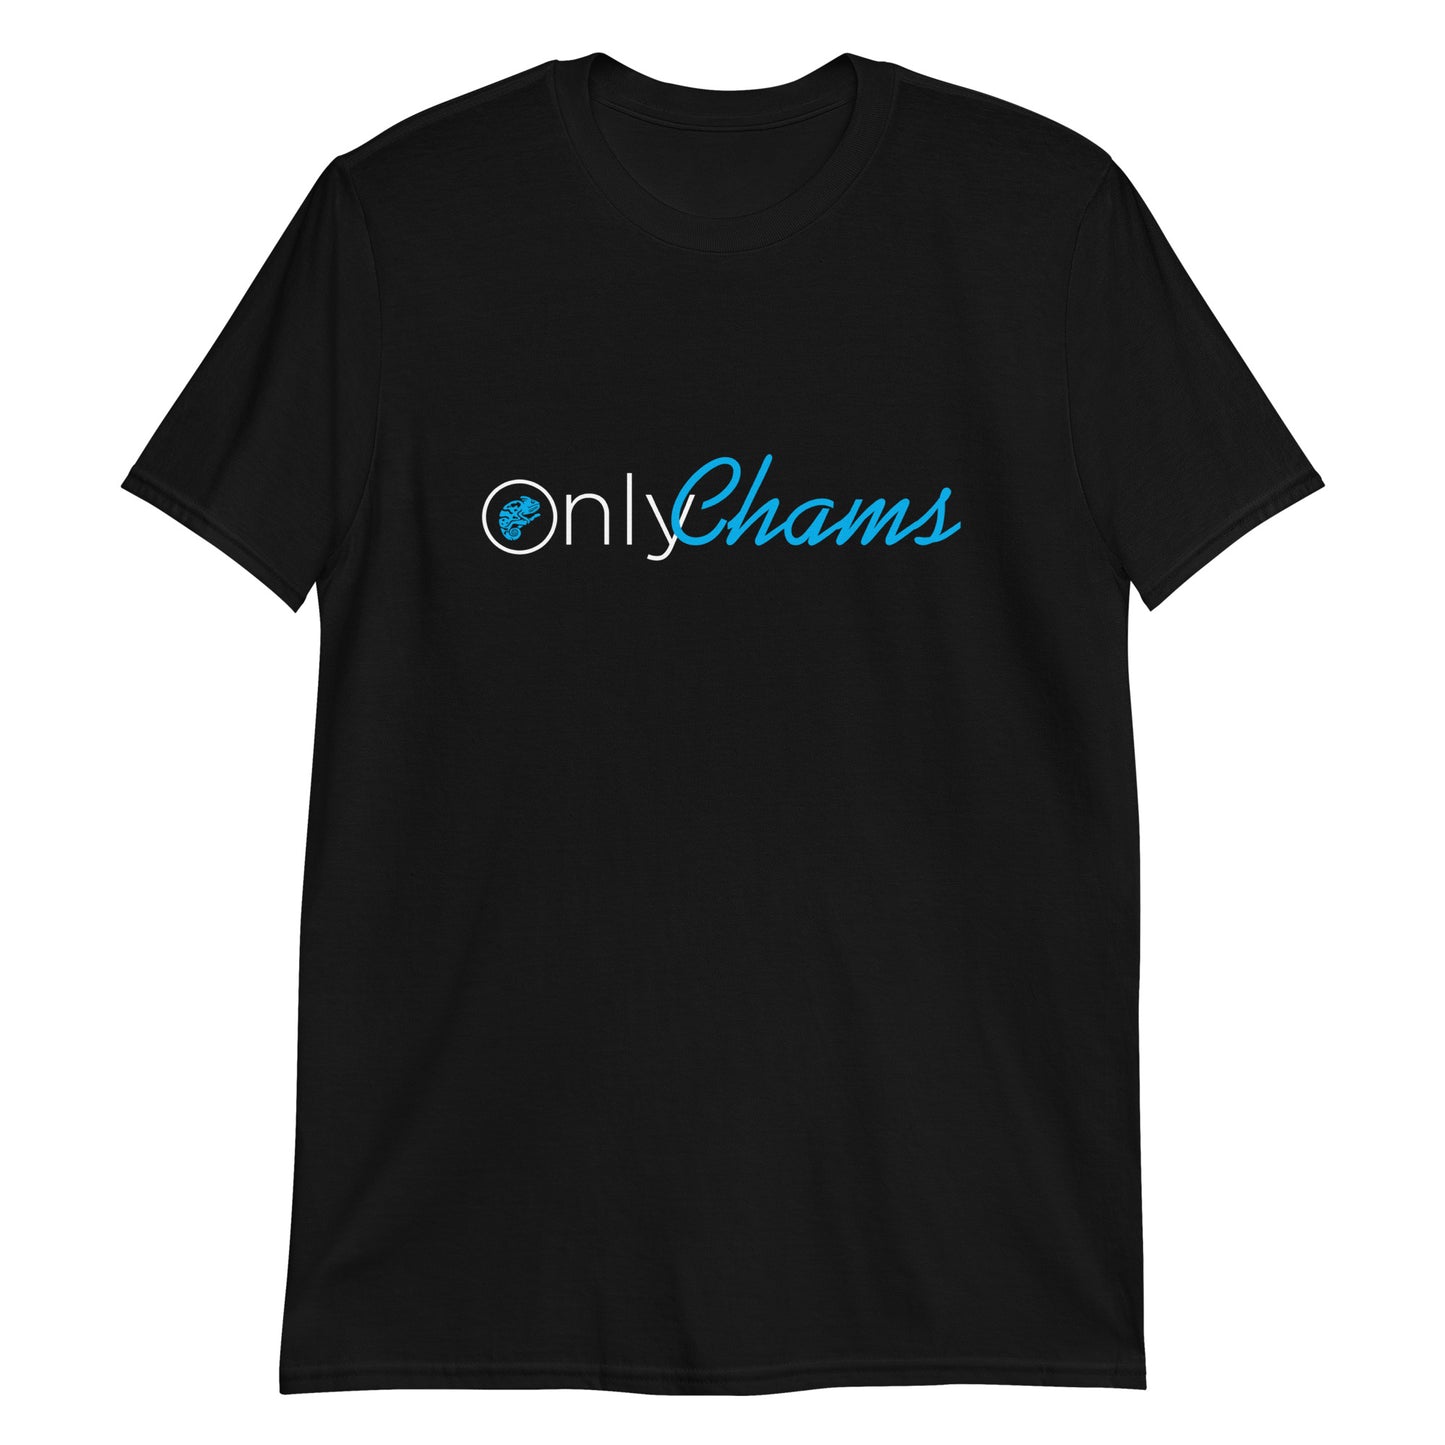 OnlyChams Women's T-Shirt